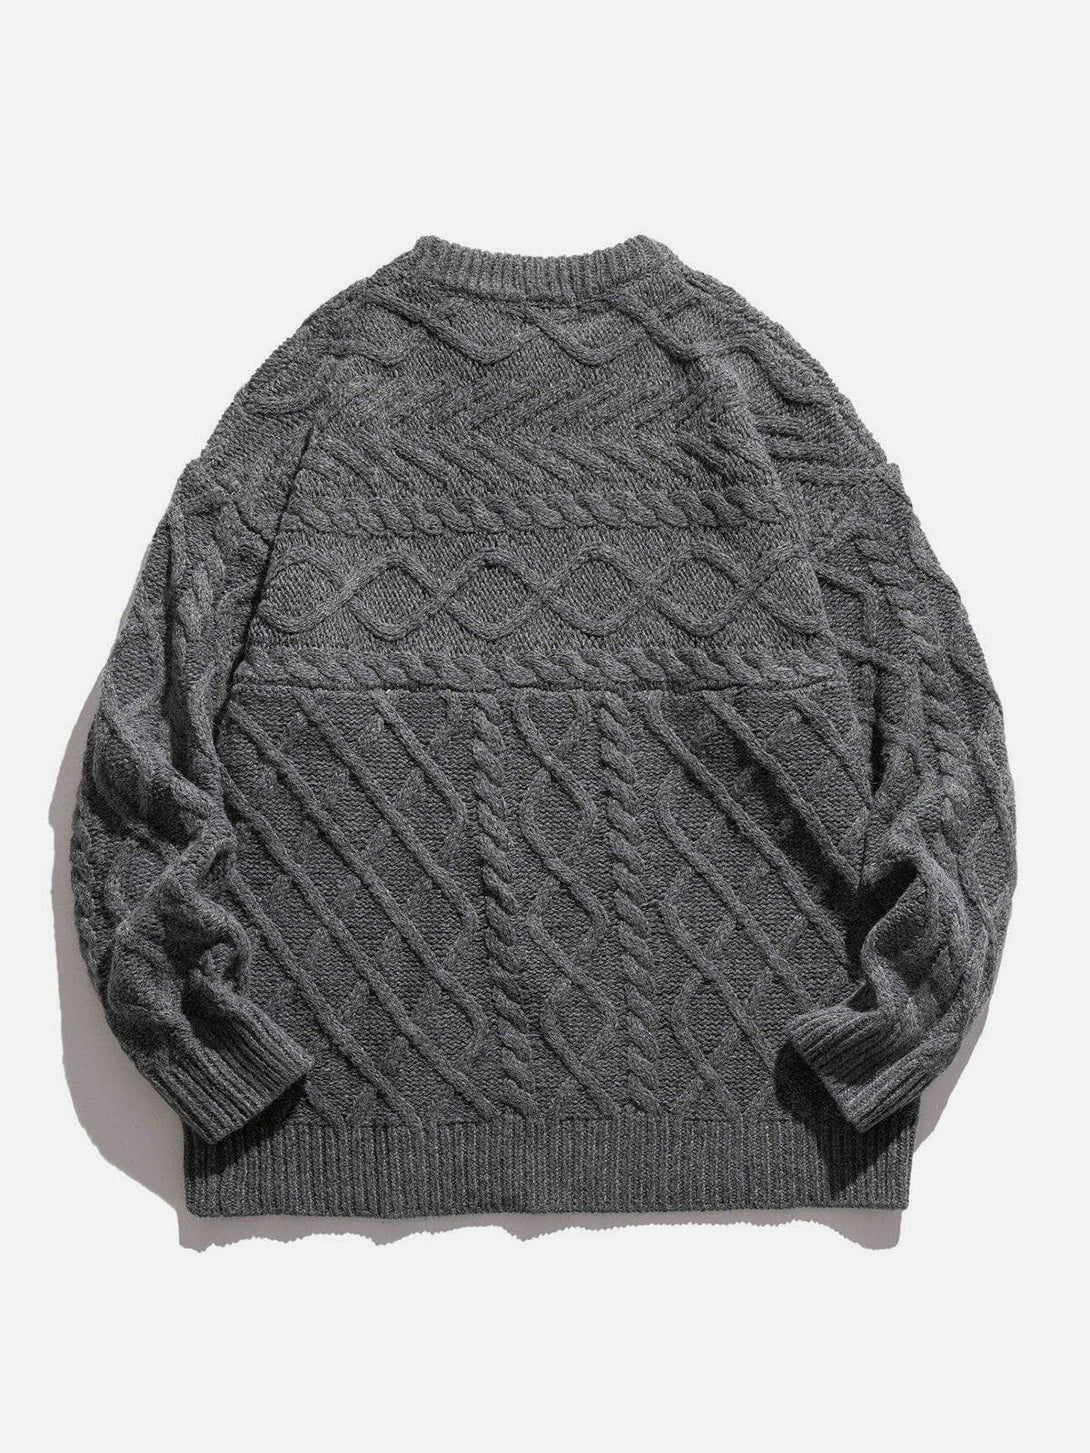 Majesda® - Hemp Pattern Solid Color Knit Sweater outfit ideas streetwear fashion